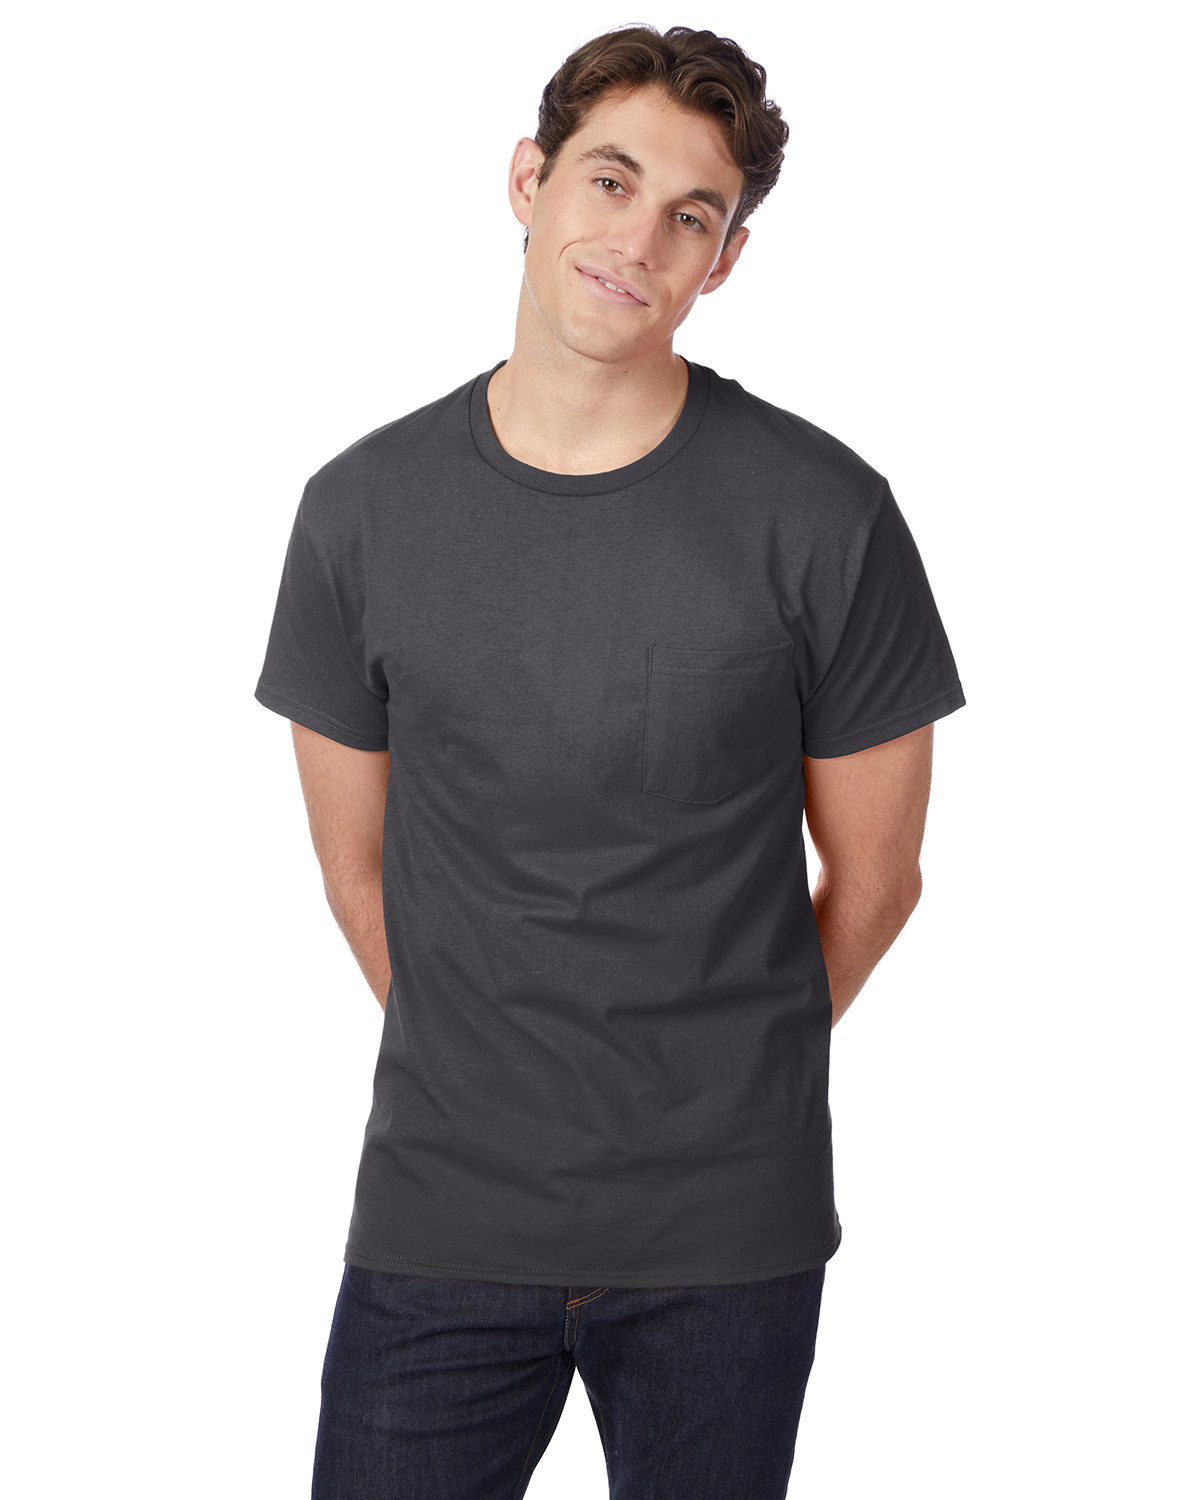 Hanes Men's Authentic-T Pocket T-Shirt smoke gray 